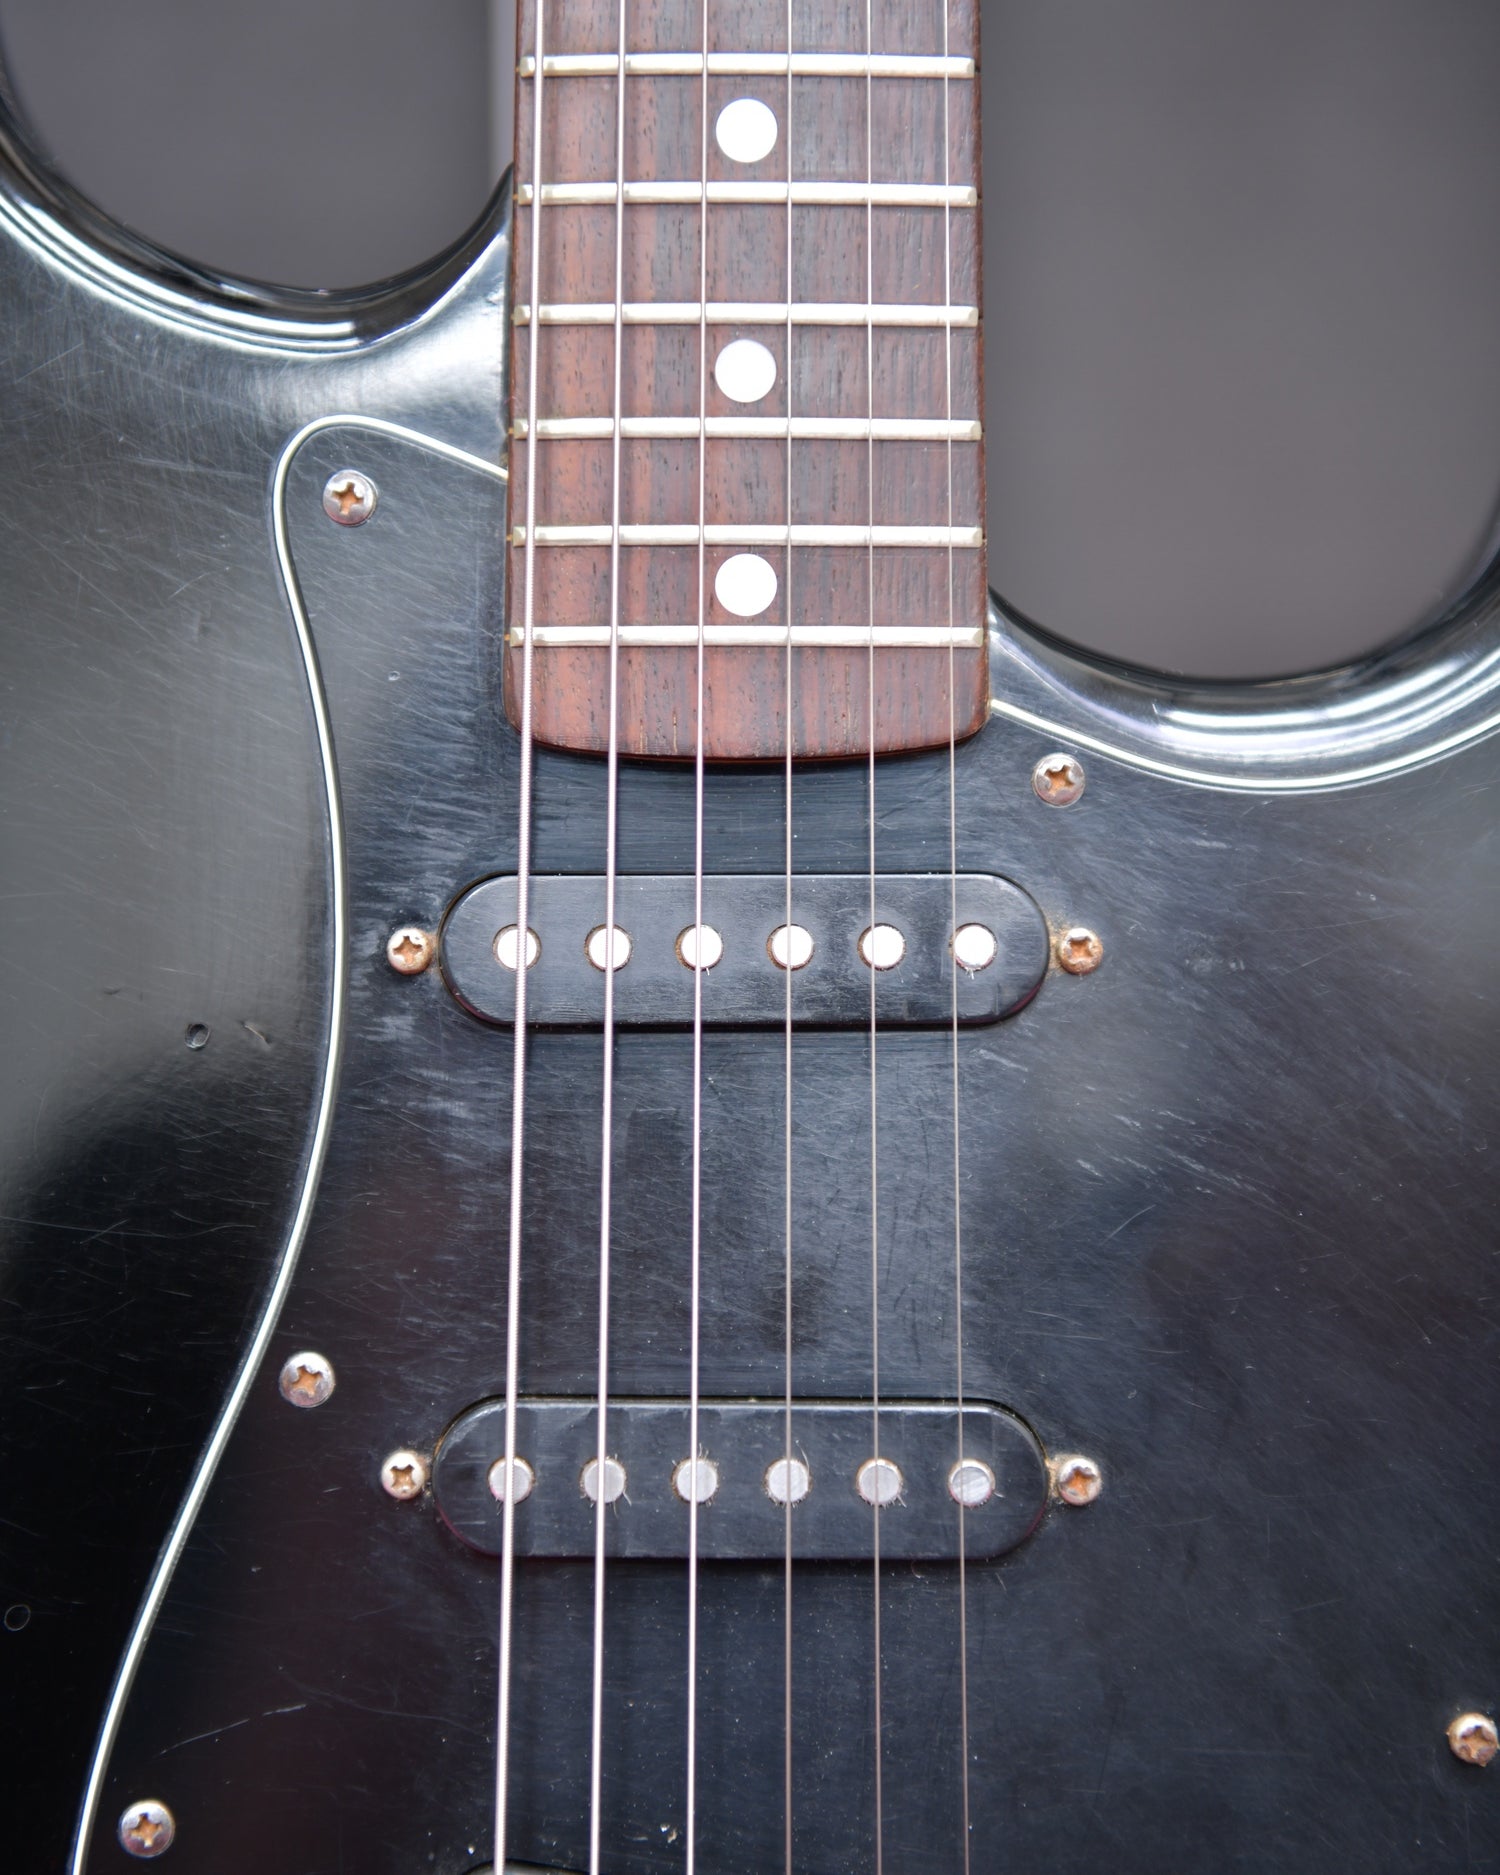 Tokai Silver Star Stratocaster MIJ 1983 black